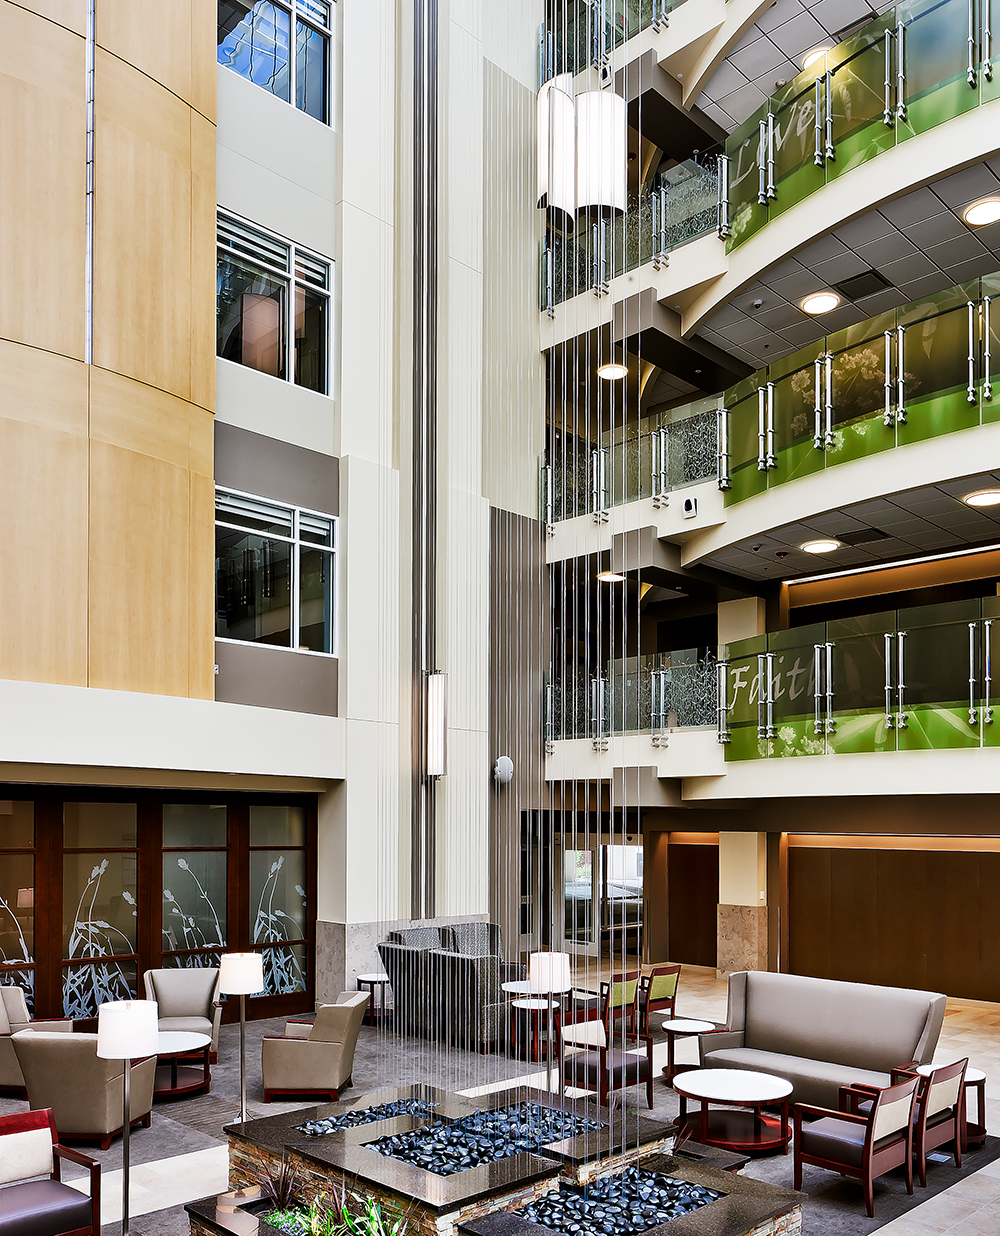 Air Foil large venue fixtures float above a healthcare design lobby to light up multiple floors.